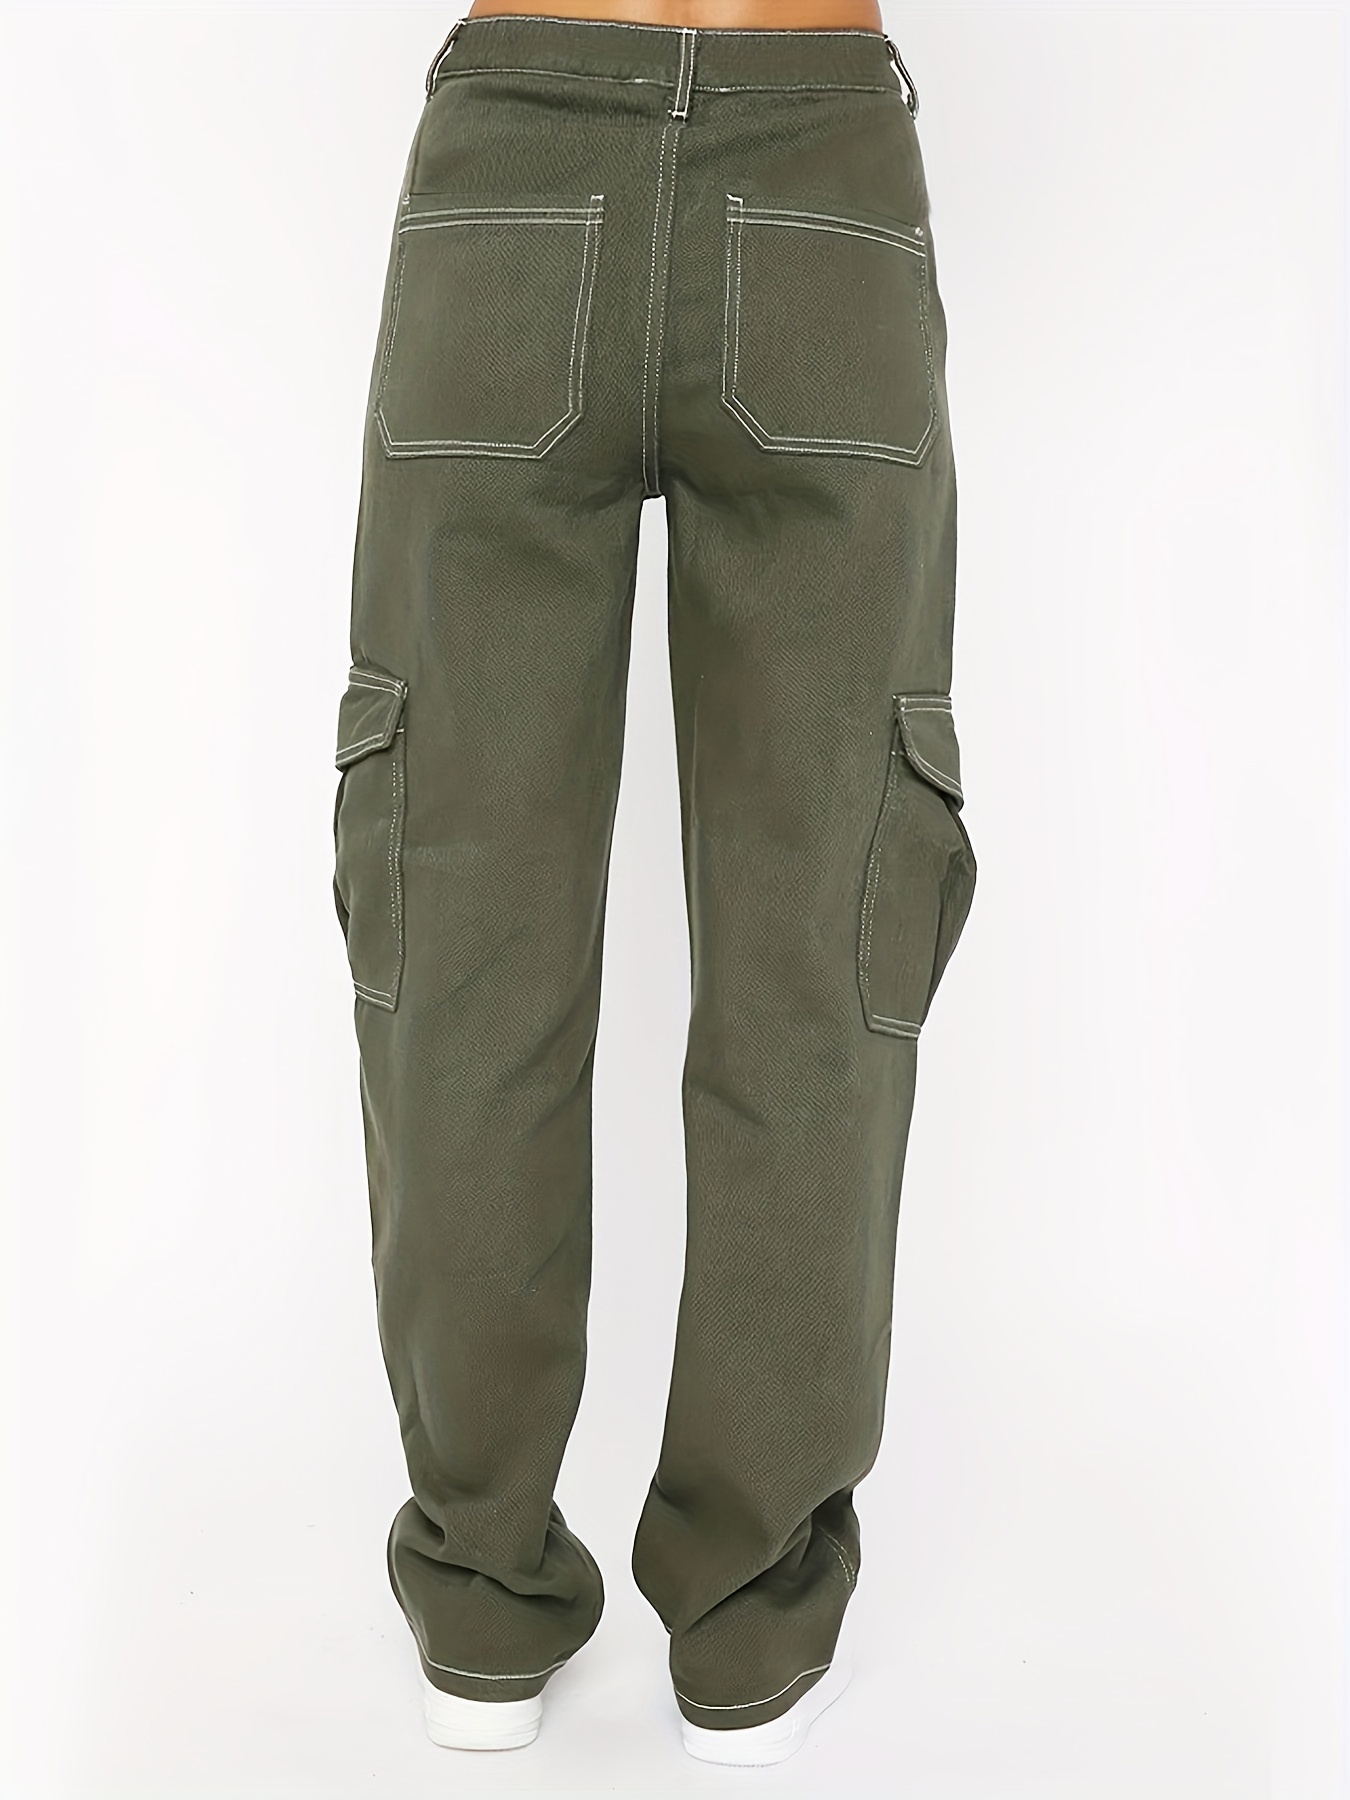 pantalon cargo verde militar - Daruma indumentaria